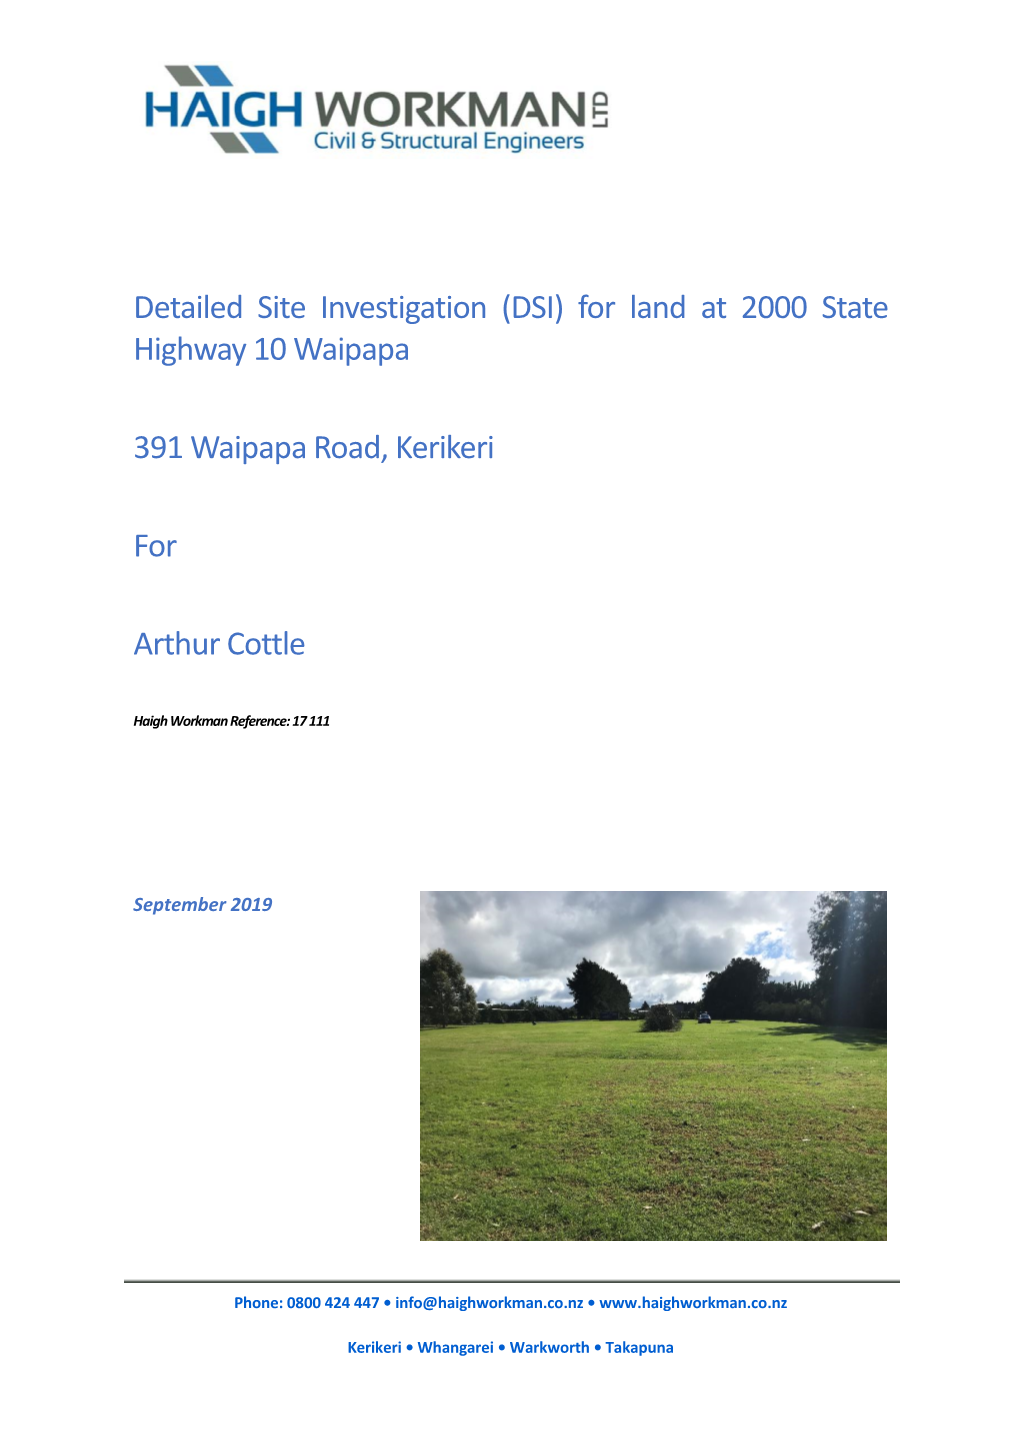 Detailed Site Investigation (DSI) for Land at 2000 State Highway 10 Waipapa 391 Waipapa Road, Kerikeri for Arthur Cottle